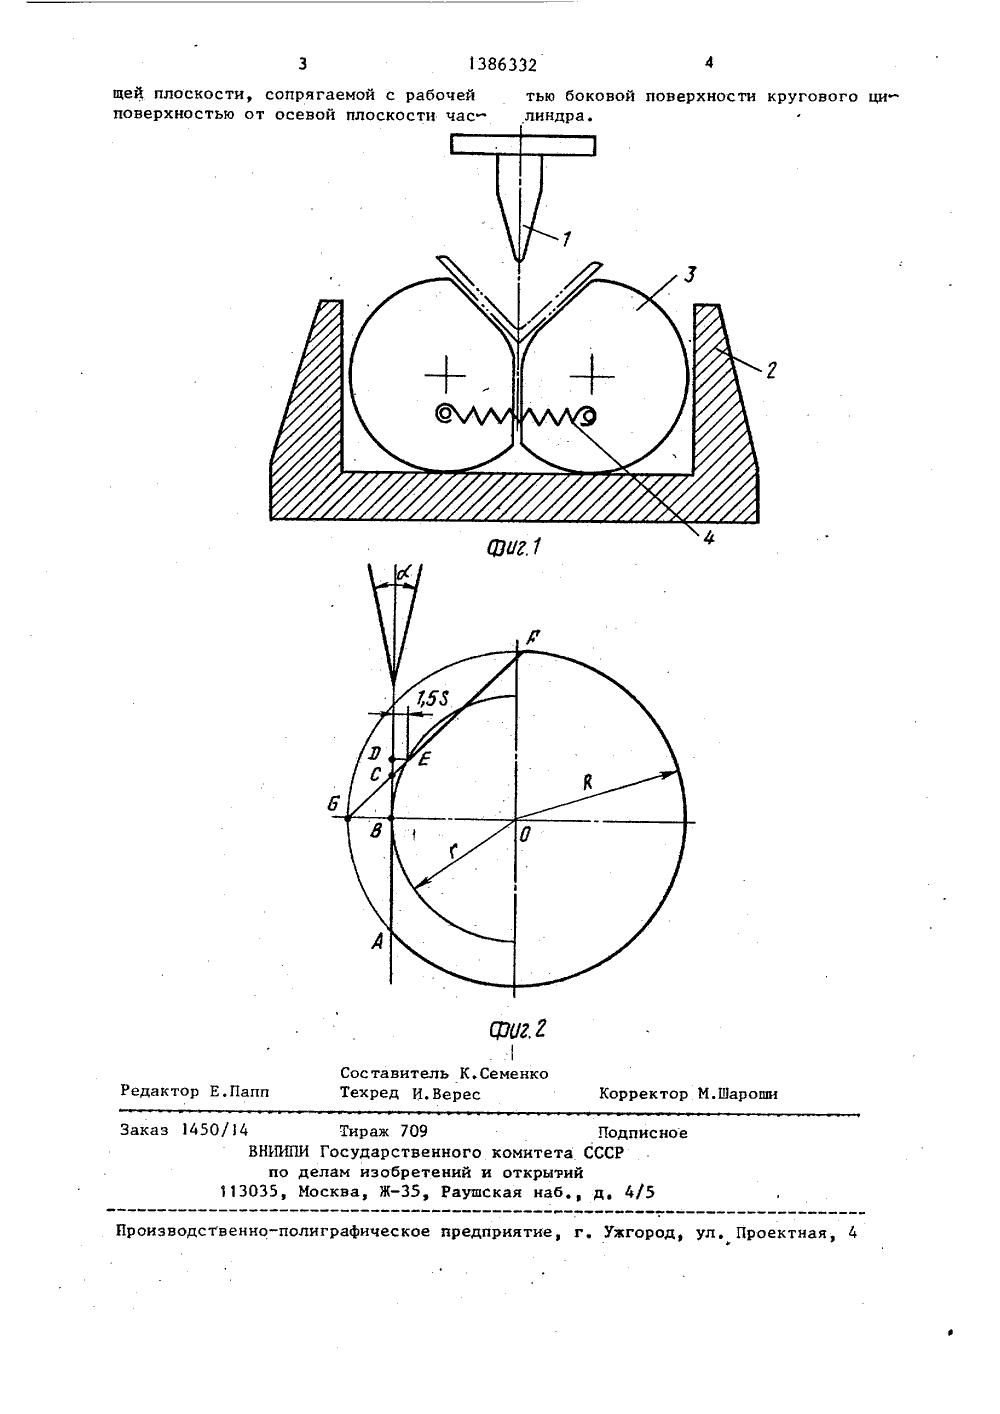 3-1386332-patents.su.JPG